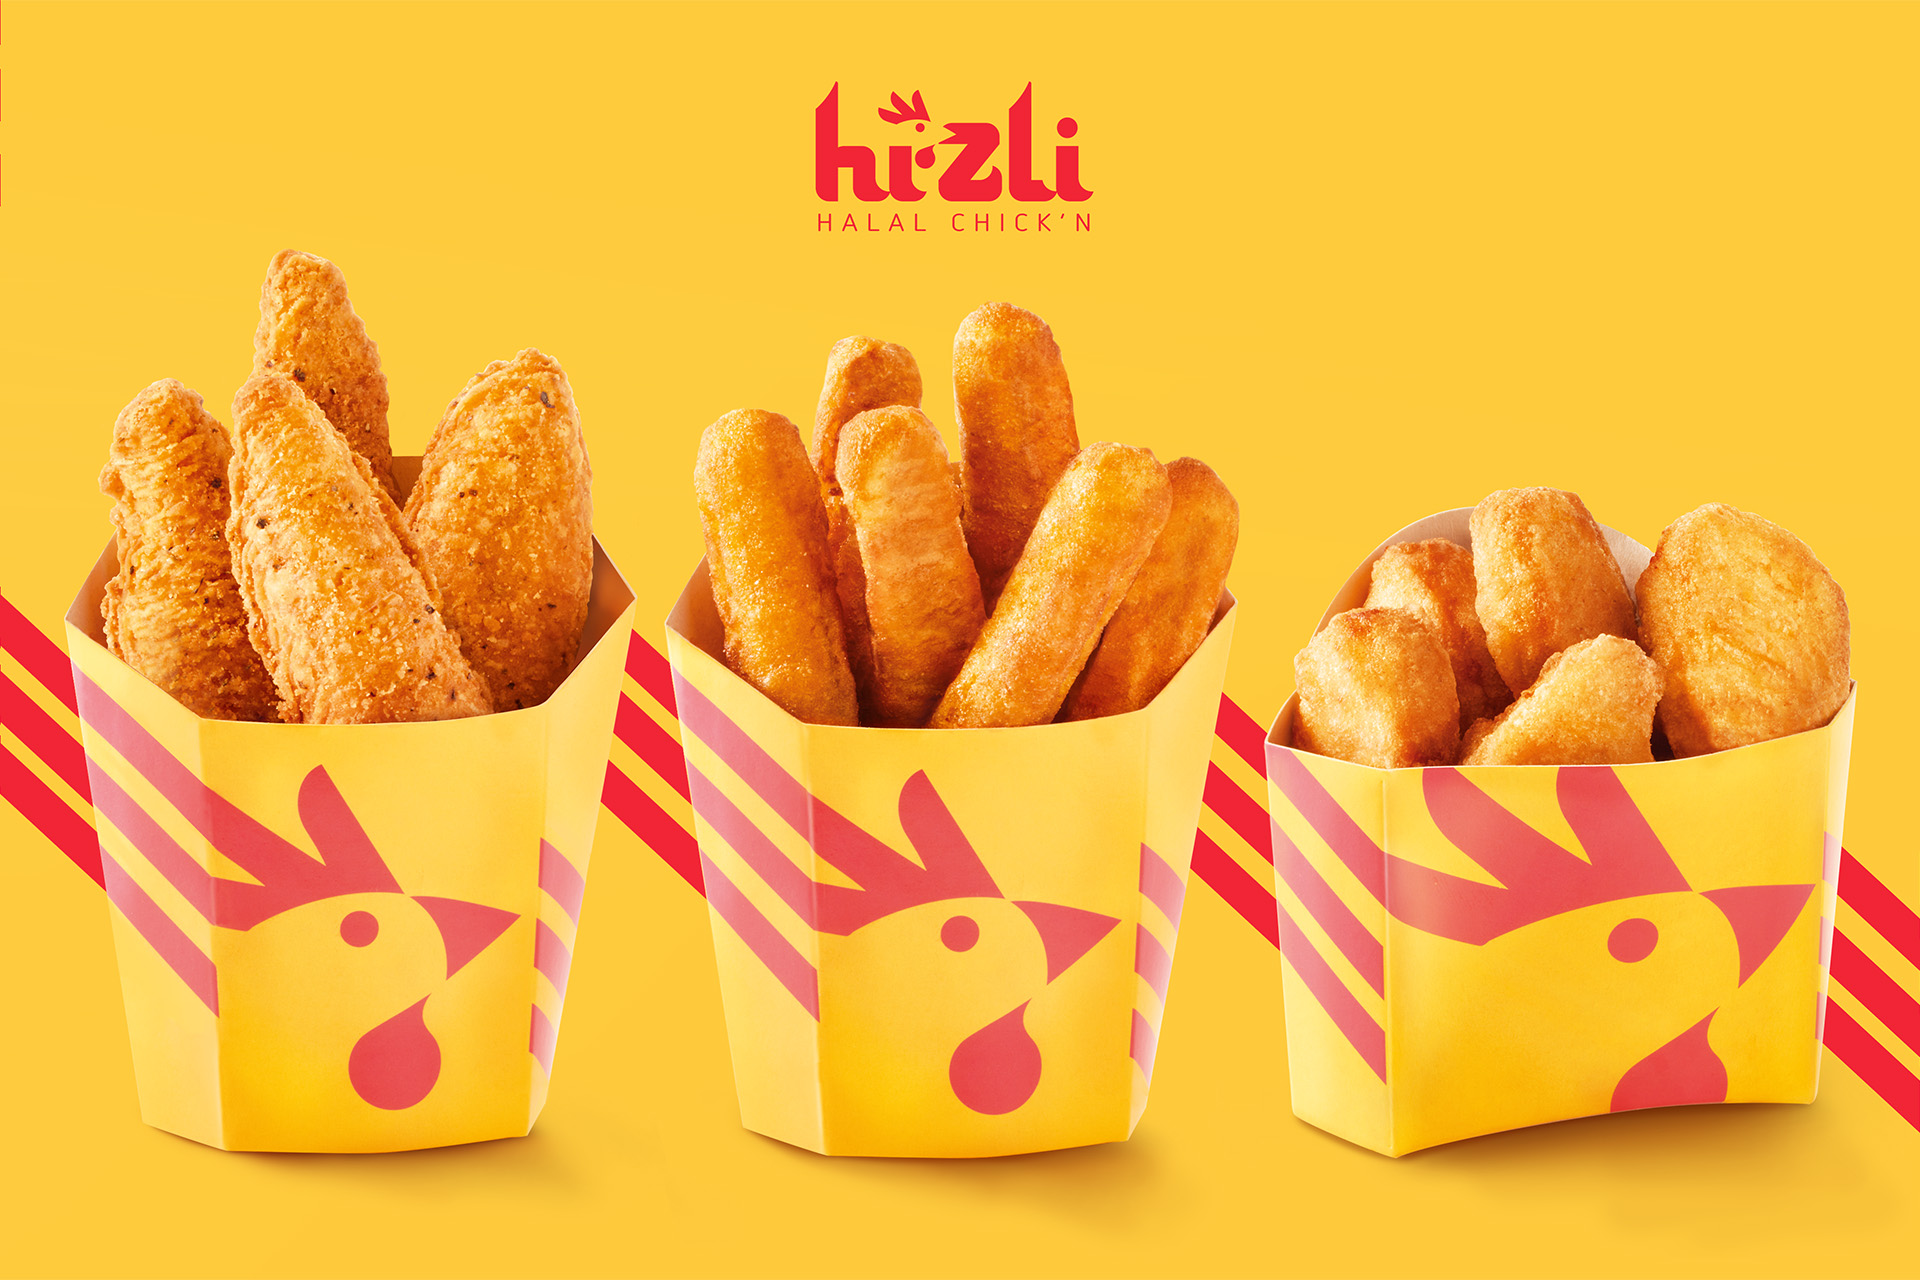 Branding for Hizli, halal chick’n by DesignRepublic